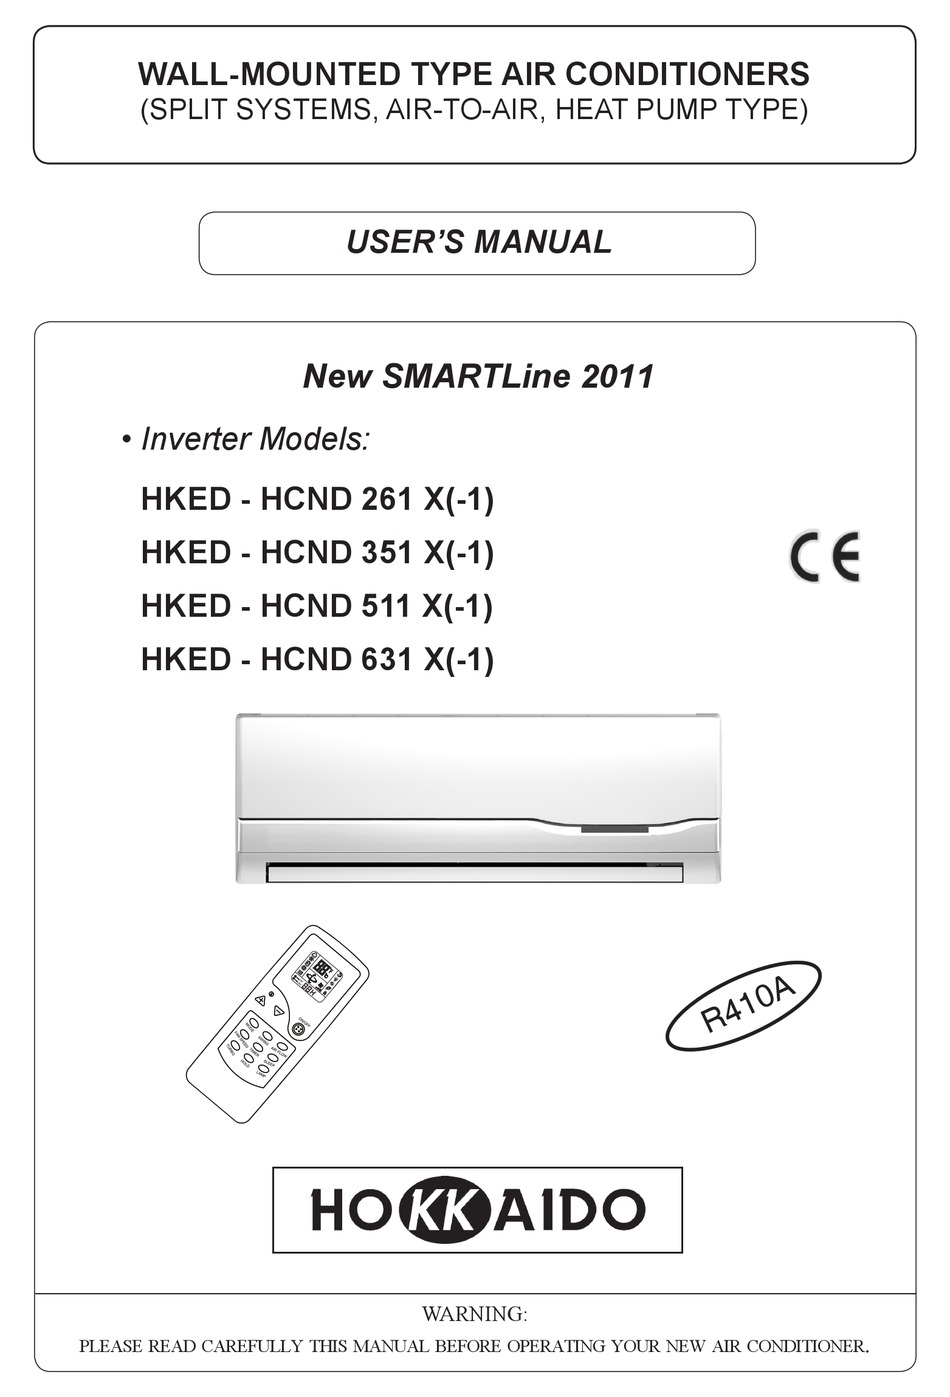 HOKKAIDO HKED - HCND 261 X(-1) USER MANUAL Pdf Download | ManualsLib